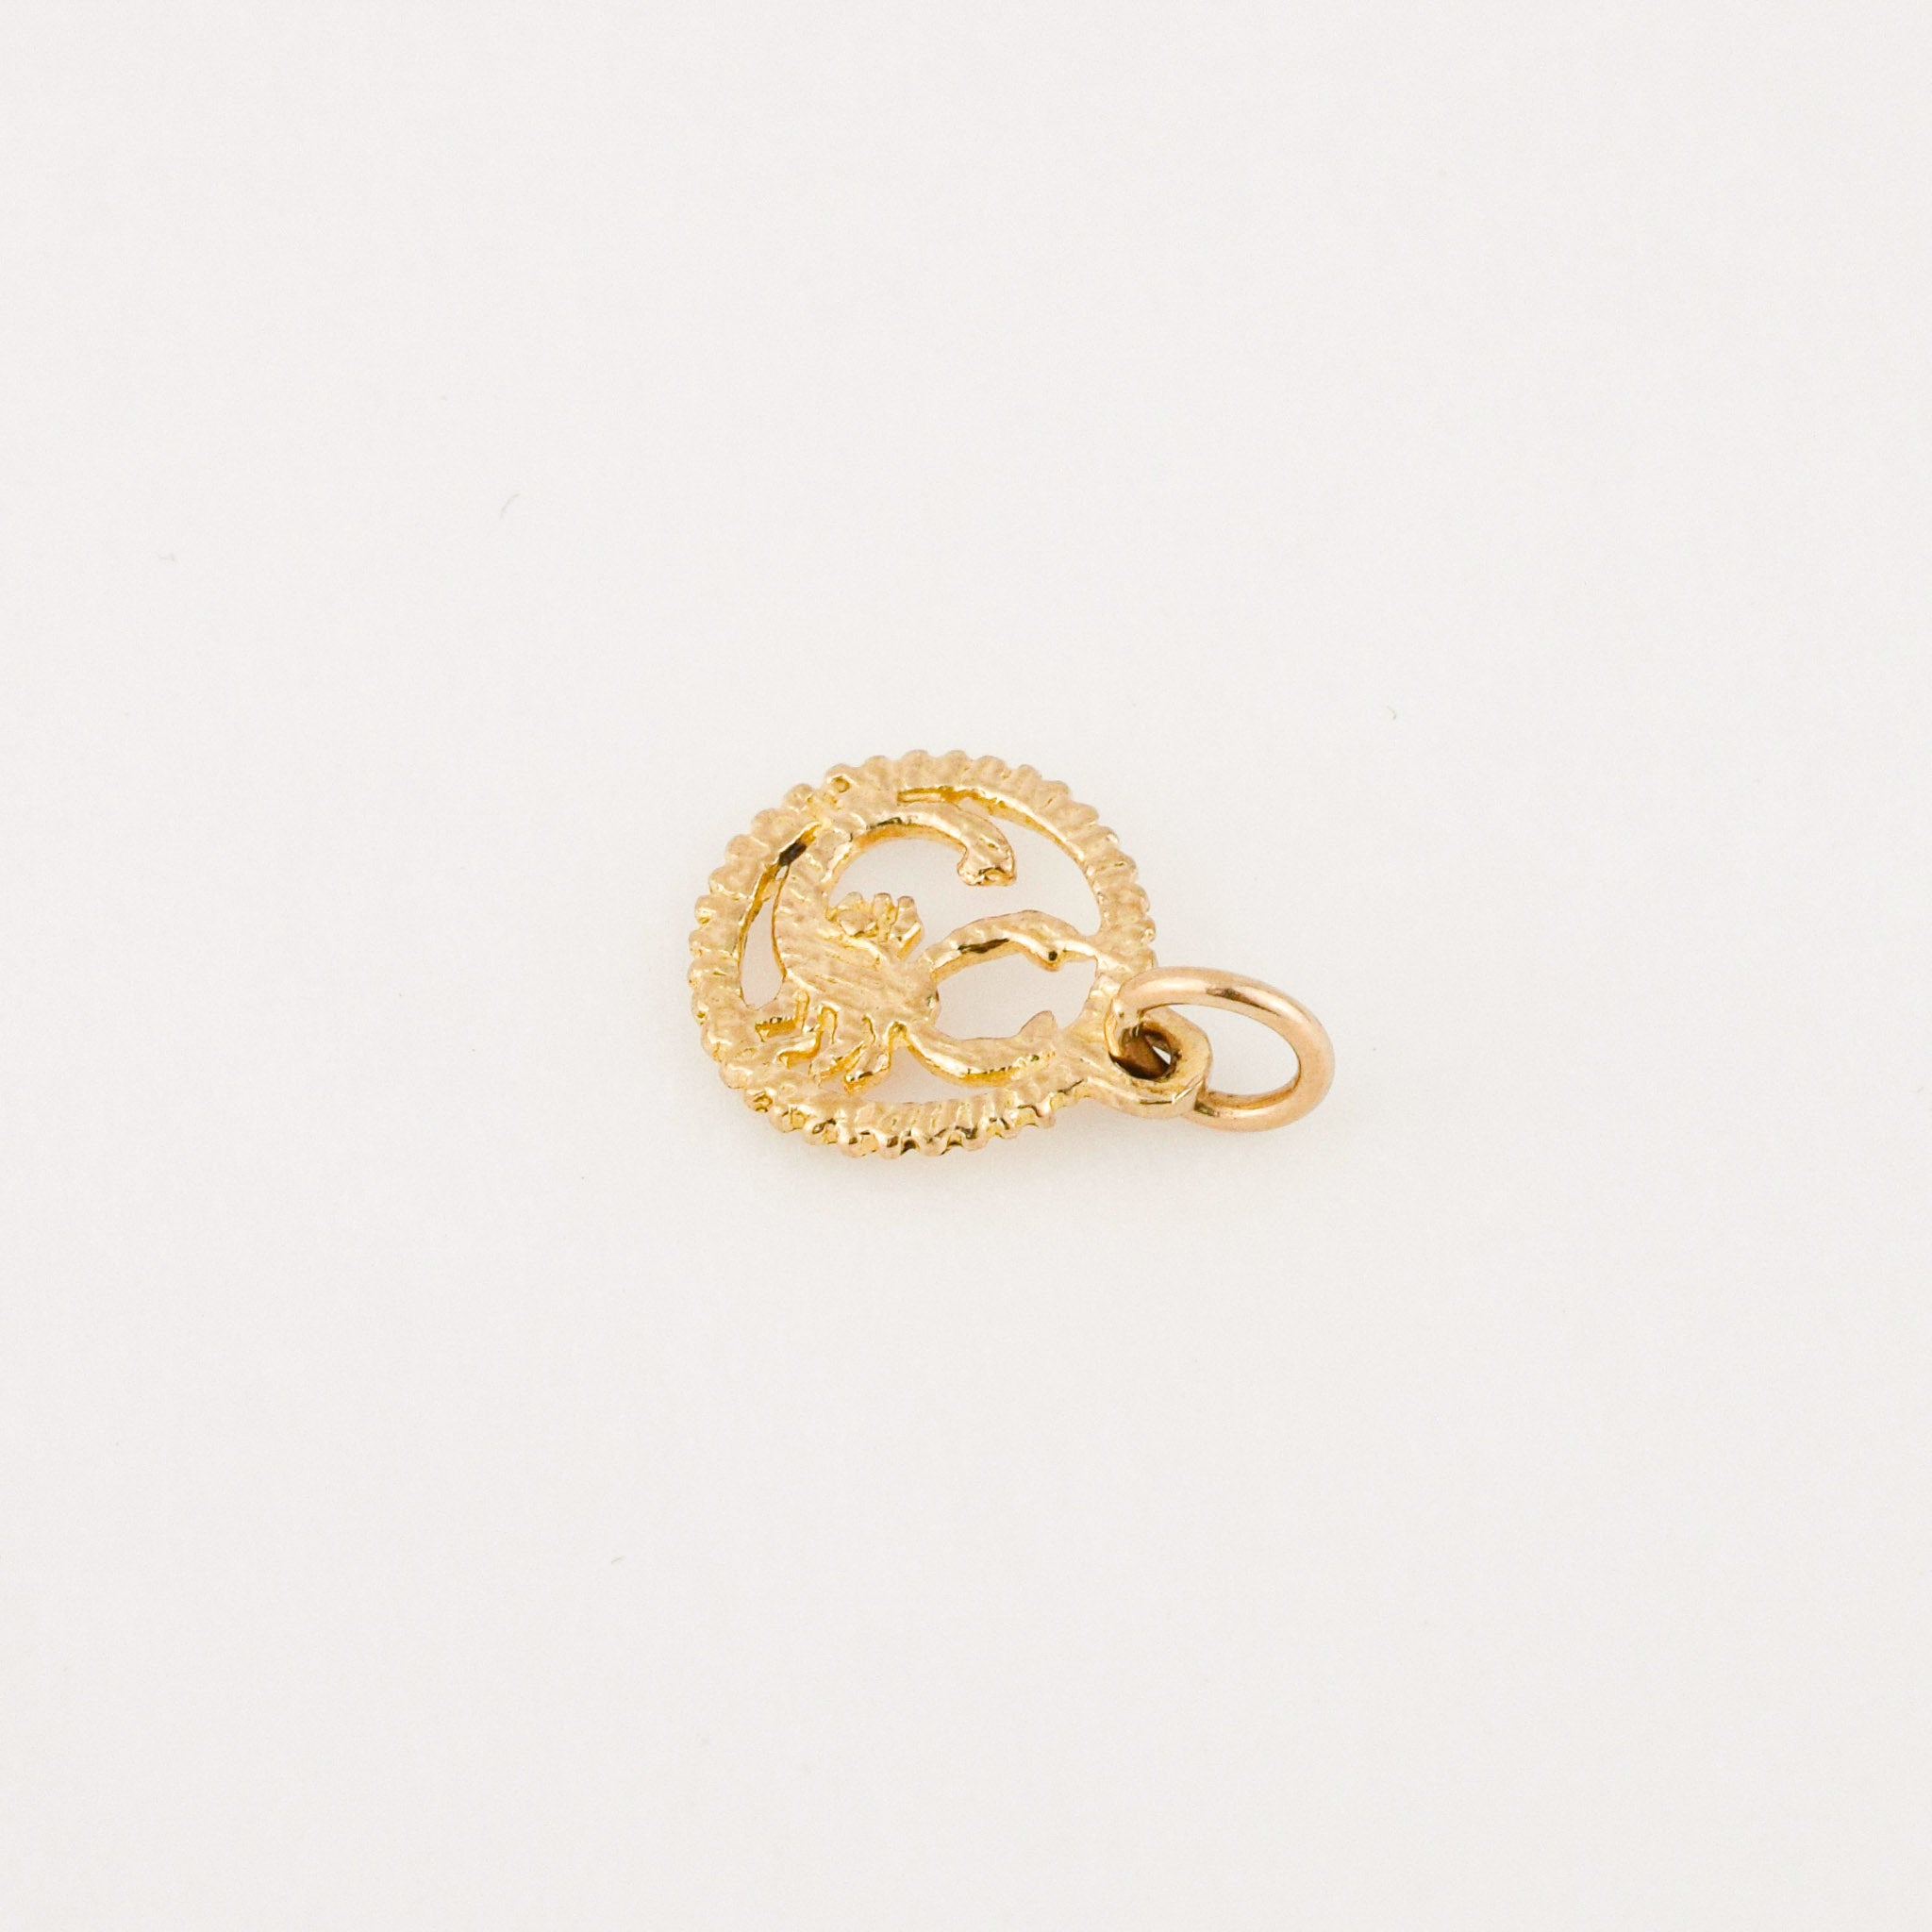 vintage gold scorpio charm pendant 